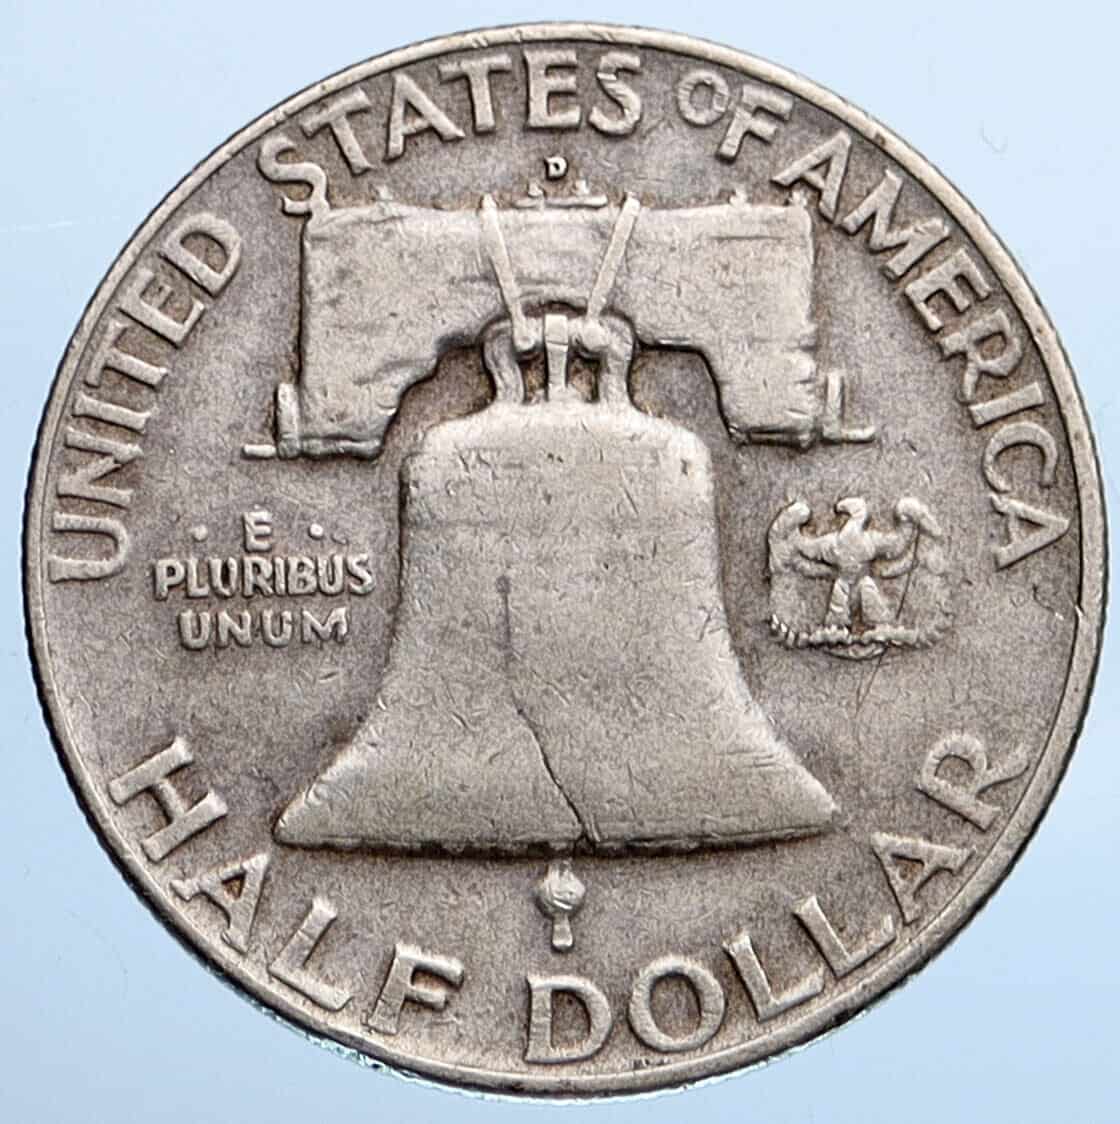 1954 Half Dollar Value for “D” Mint Mark